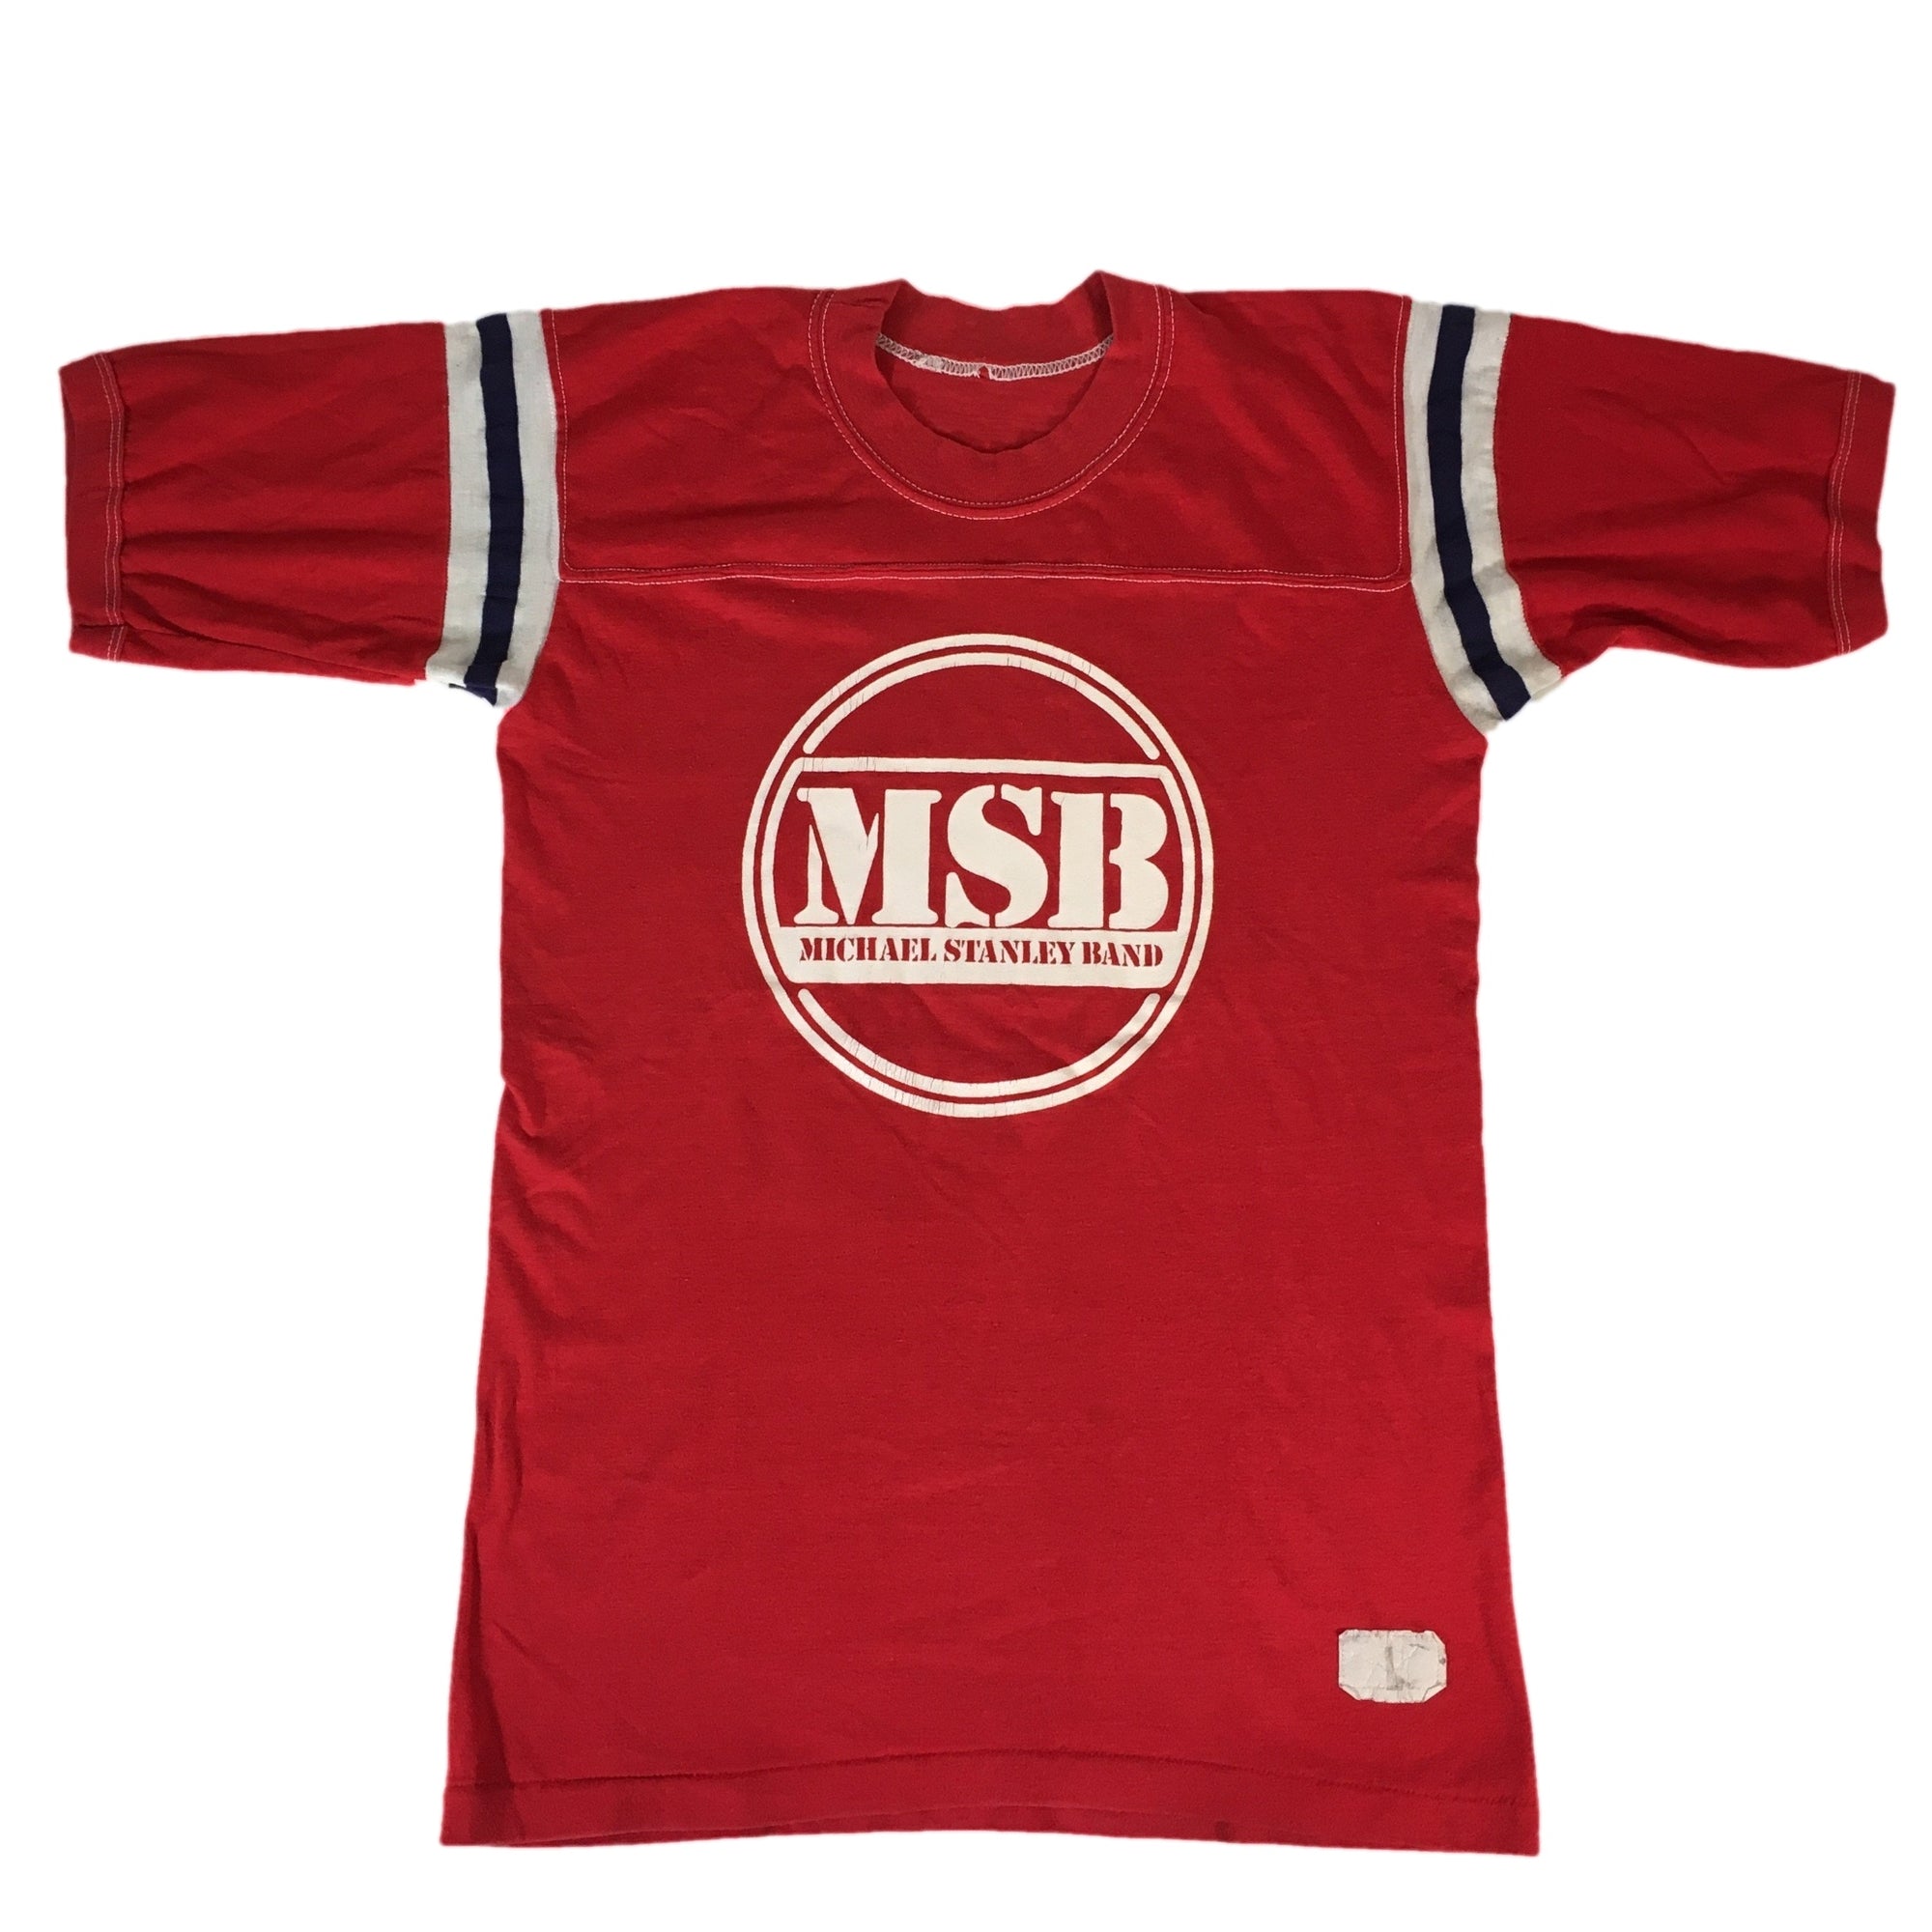 Vintage Michael Stanley "MSB" T-Shirt. - jointcustodydc